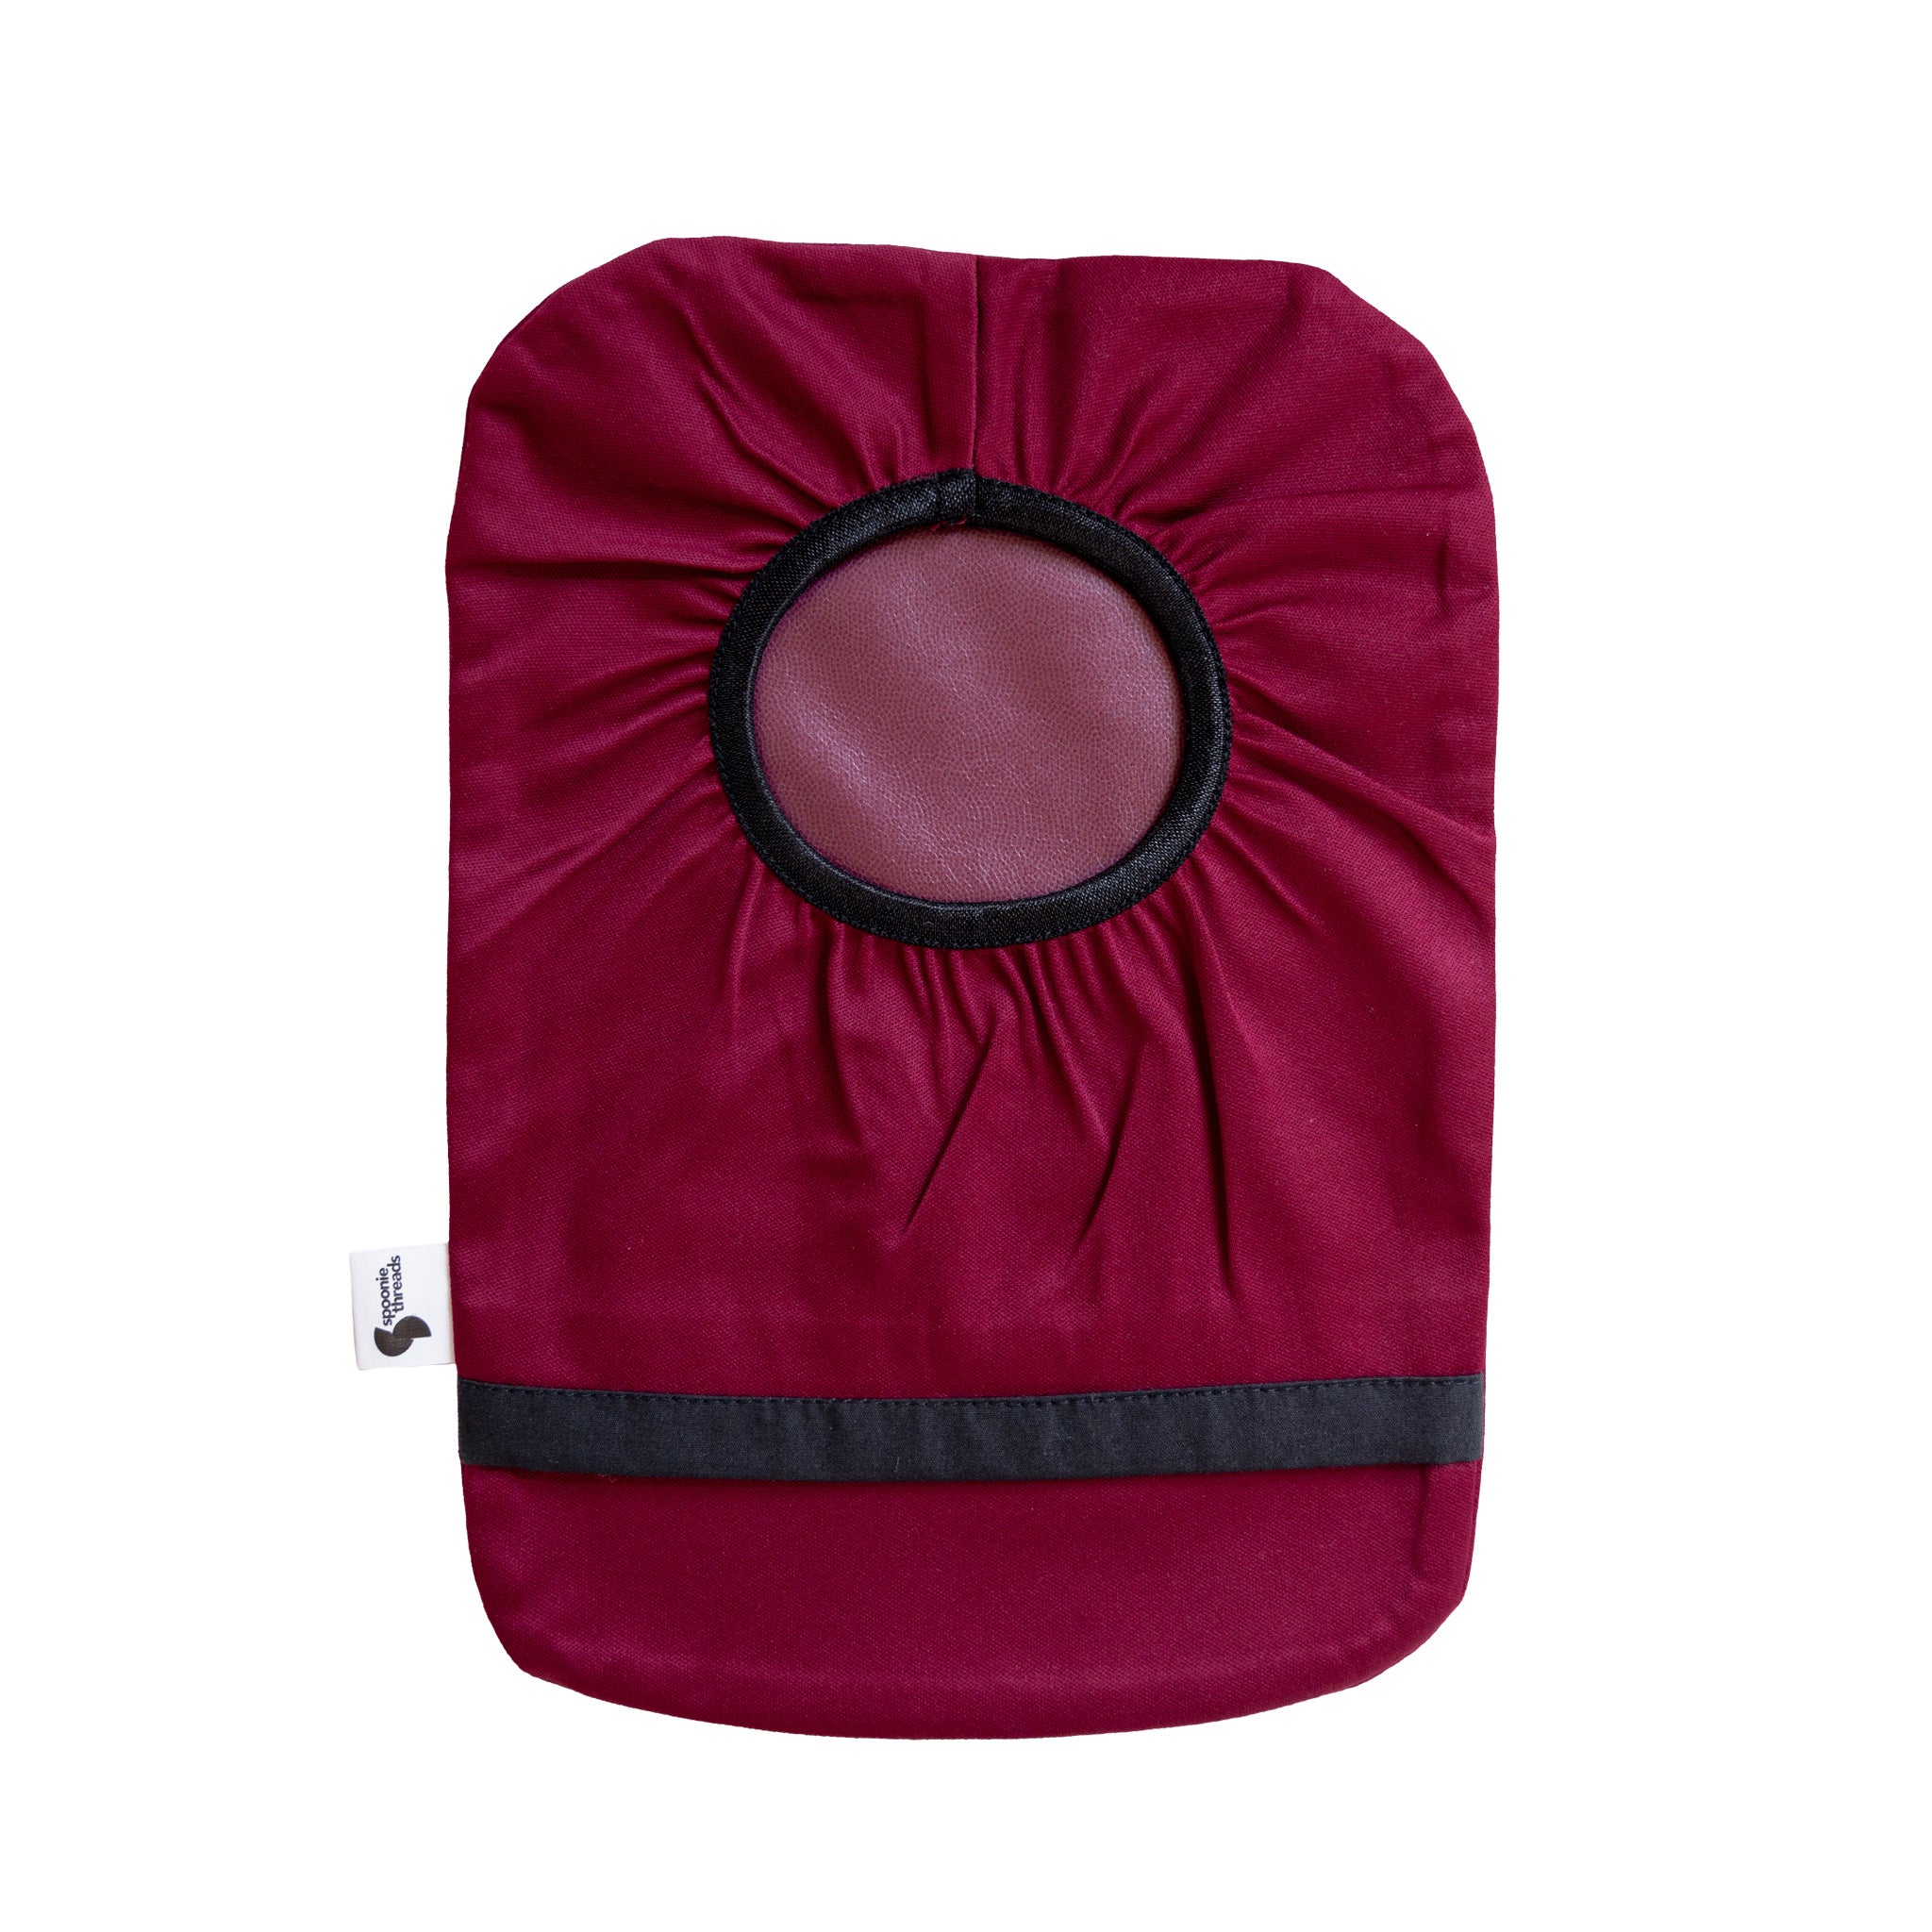 Burgundy Elastic Ostomy Bag Cover